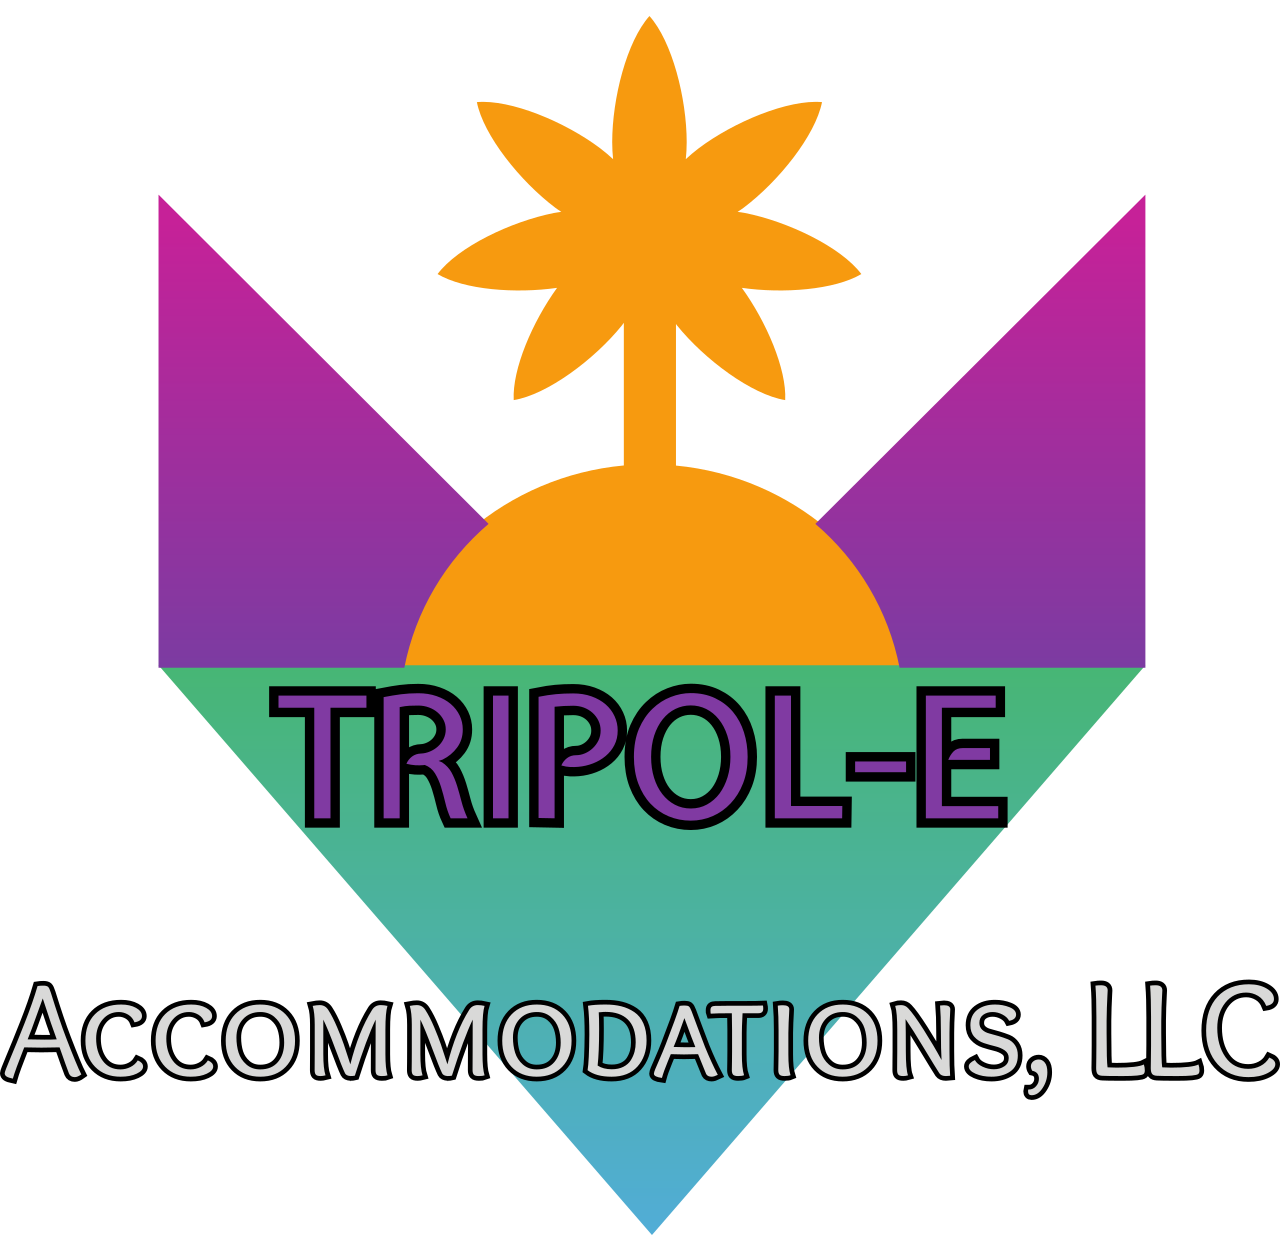 TRIPOL-E's web page